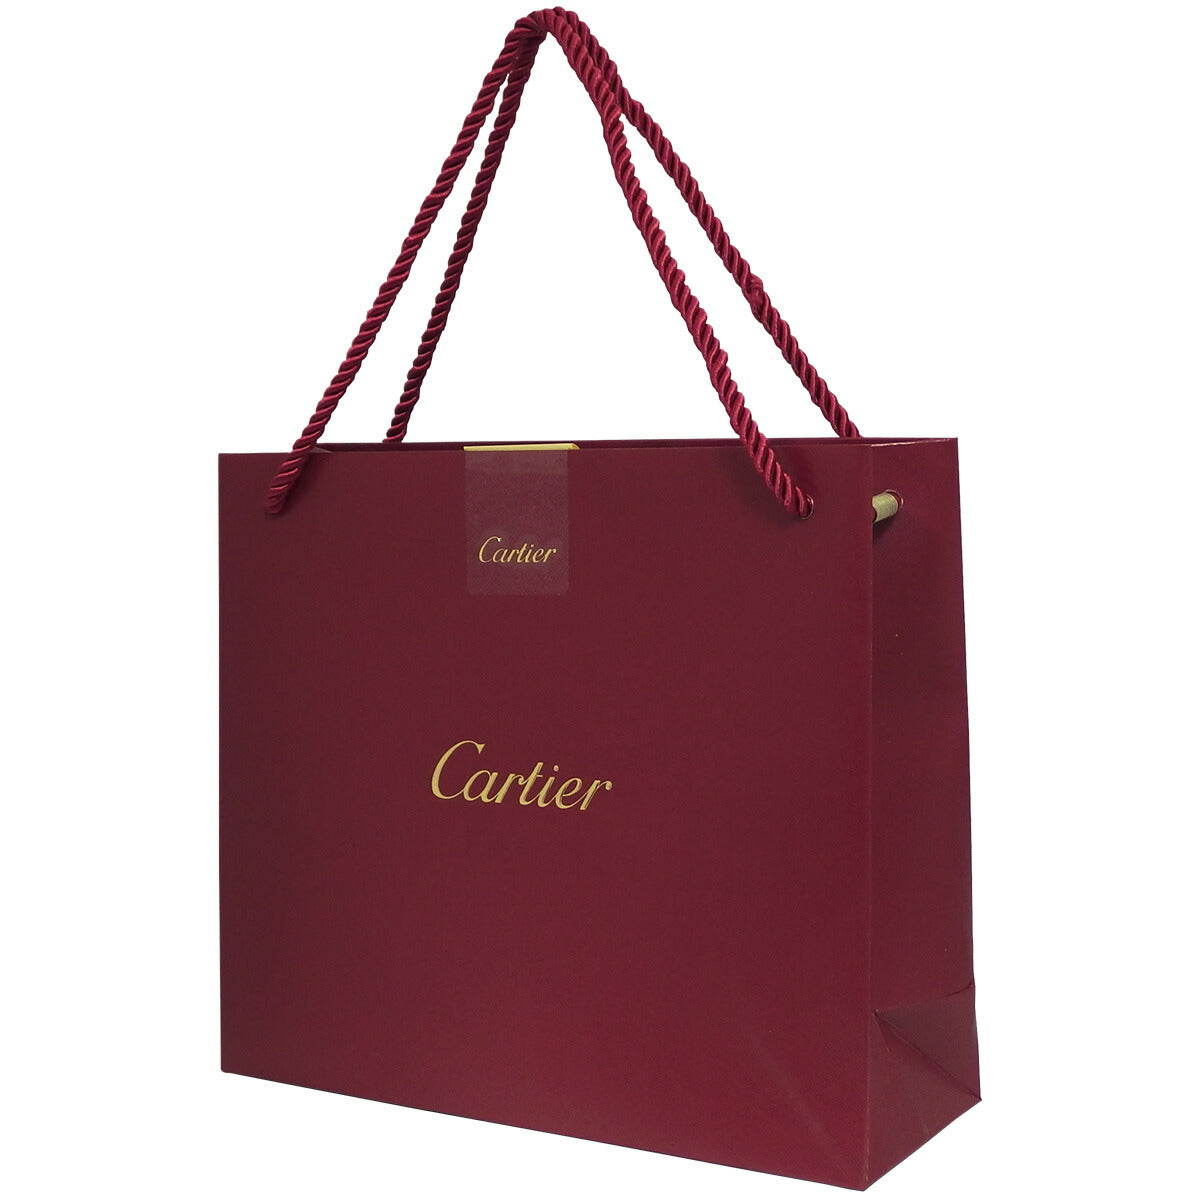 [※ Outlet ※] Cartier Cartier shop bag shopper 1 piece A set red hand-held  shop bag sub bag wrapping gift bag brand mail order utilization usage paper